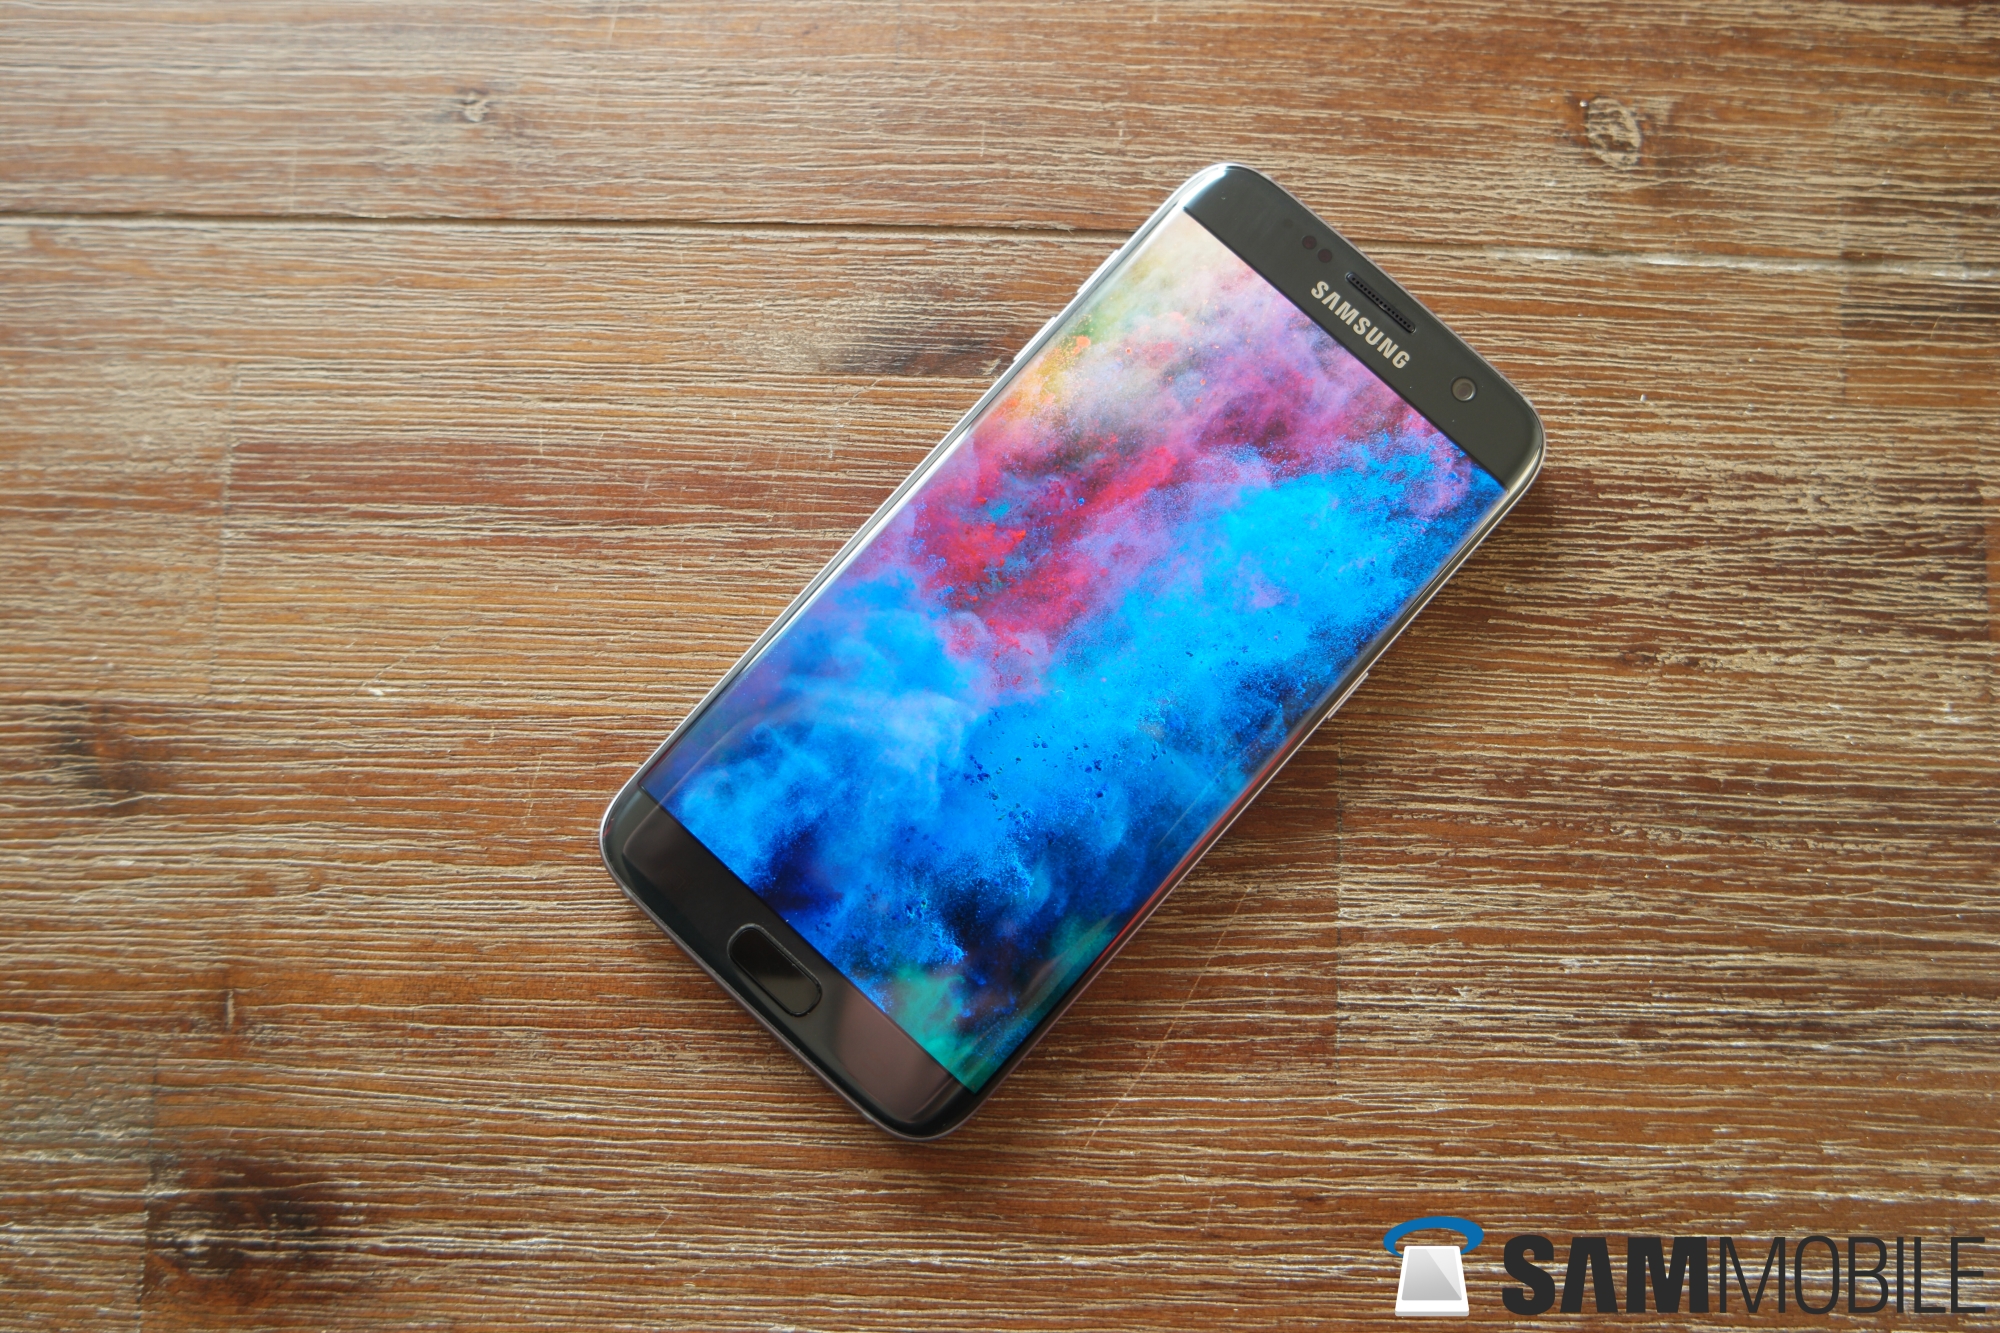 Samsung Galaxy S7 edge - SamMobile